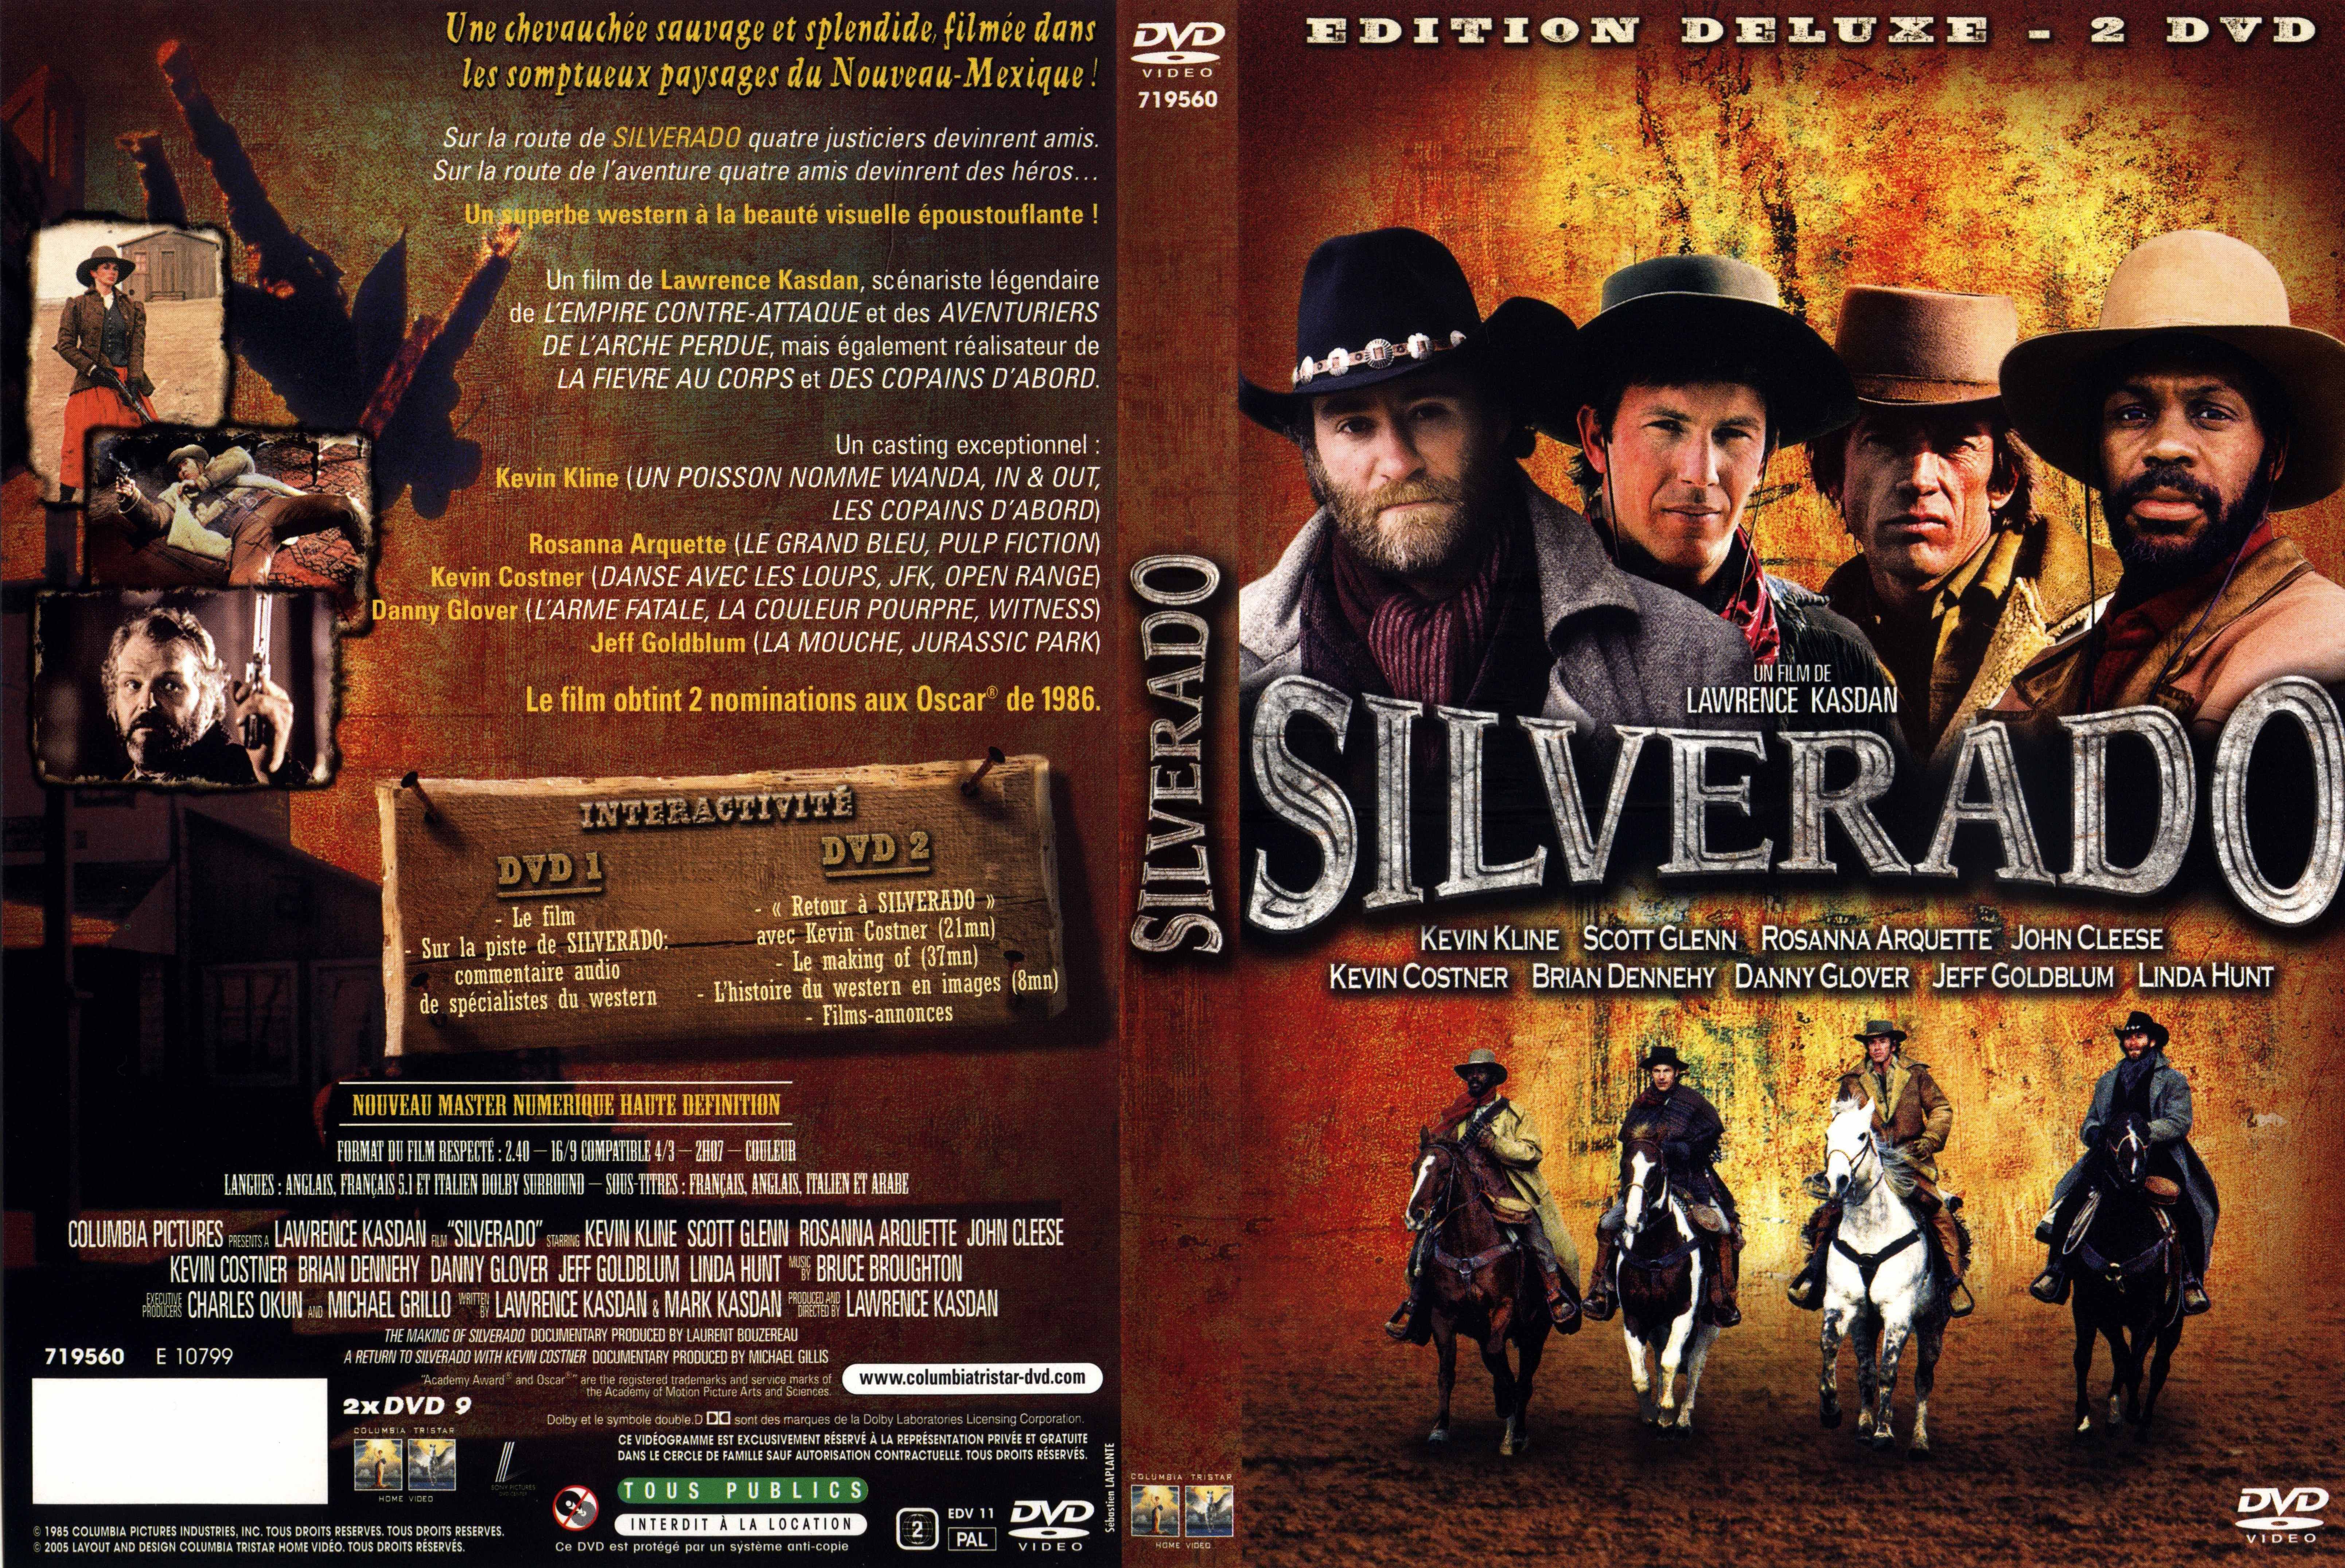 Jaquette DVD Silverado v2